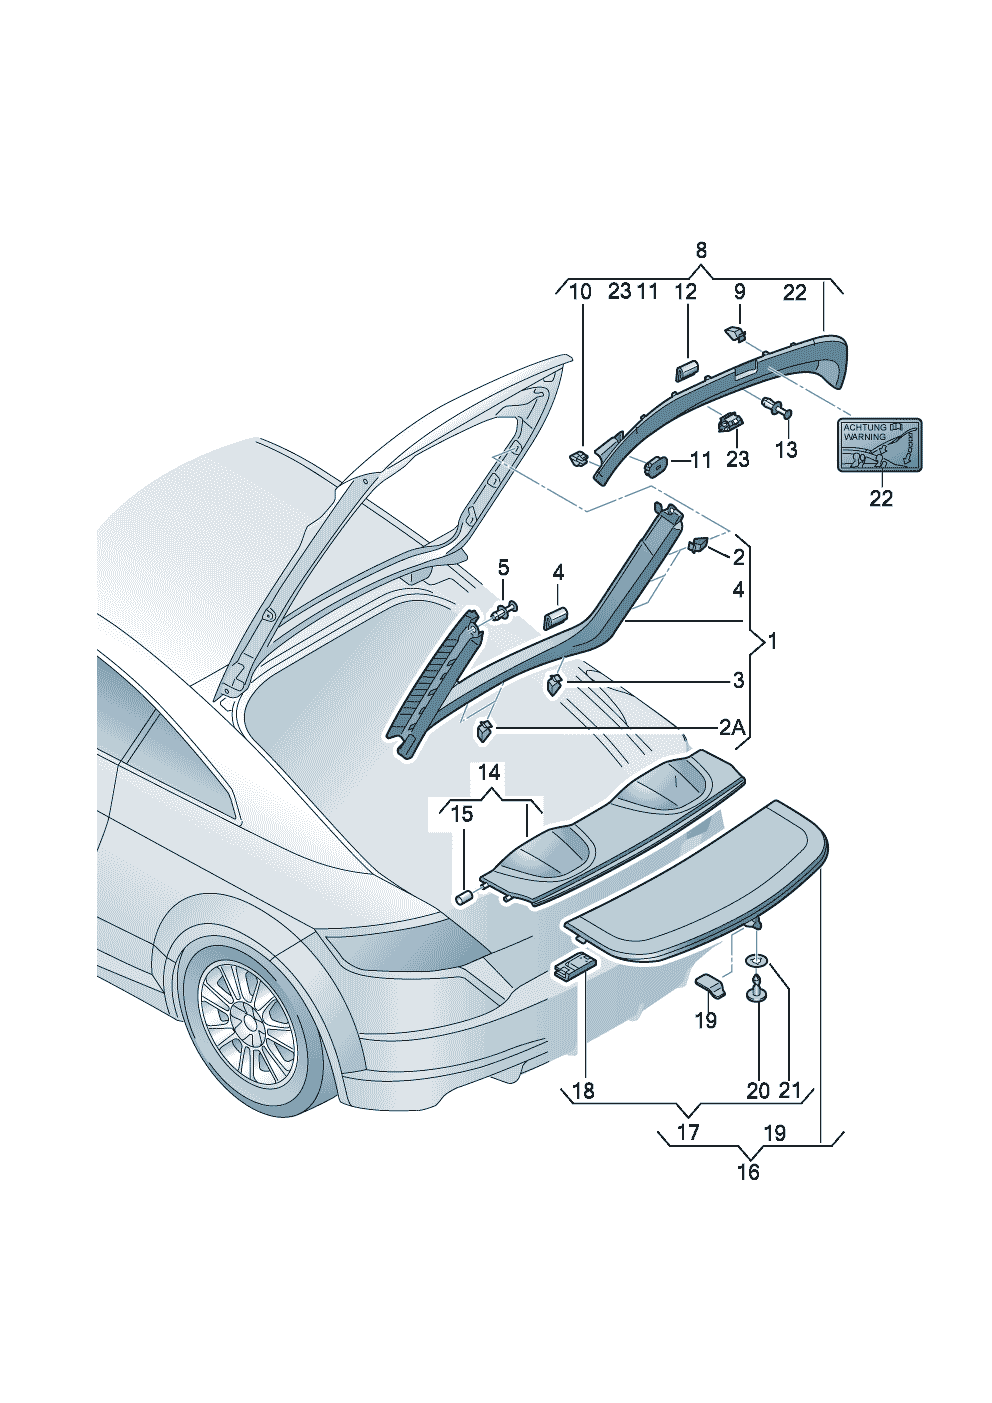 Achterklepbekledingdeksel voor bagageruimte-<br>afdekking  - Audi TT/TTS Coupe/Roadster - att